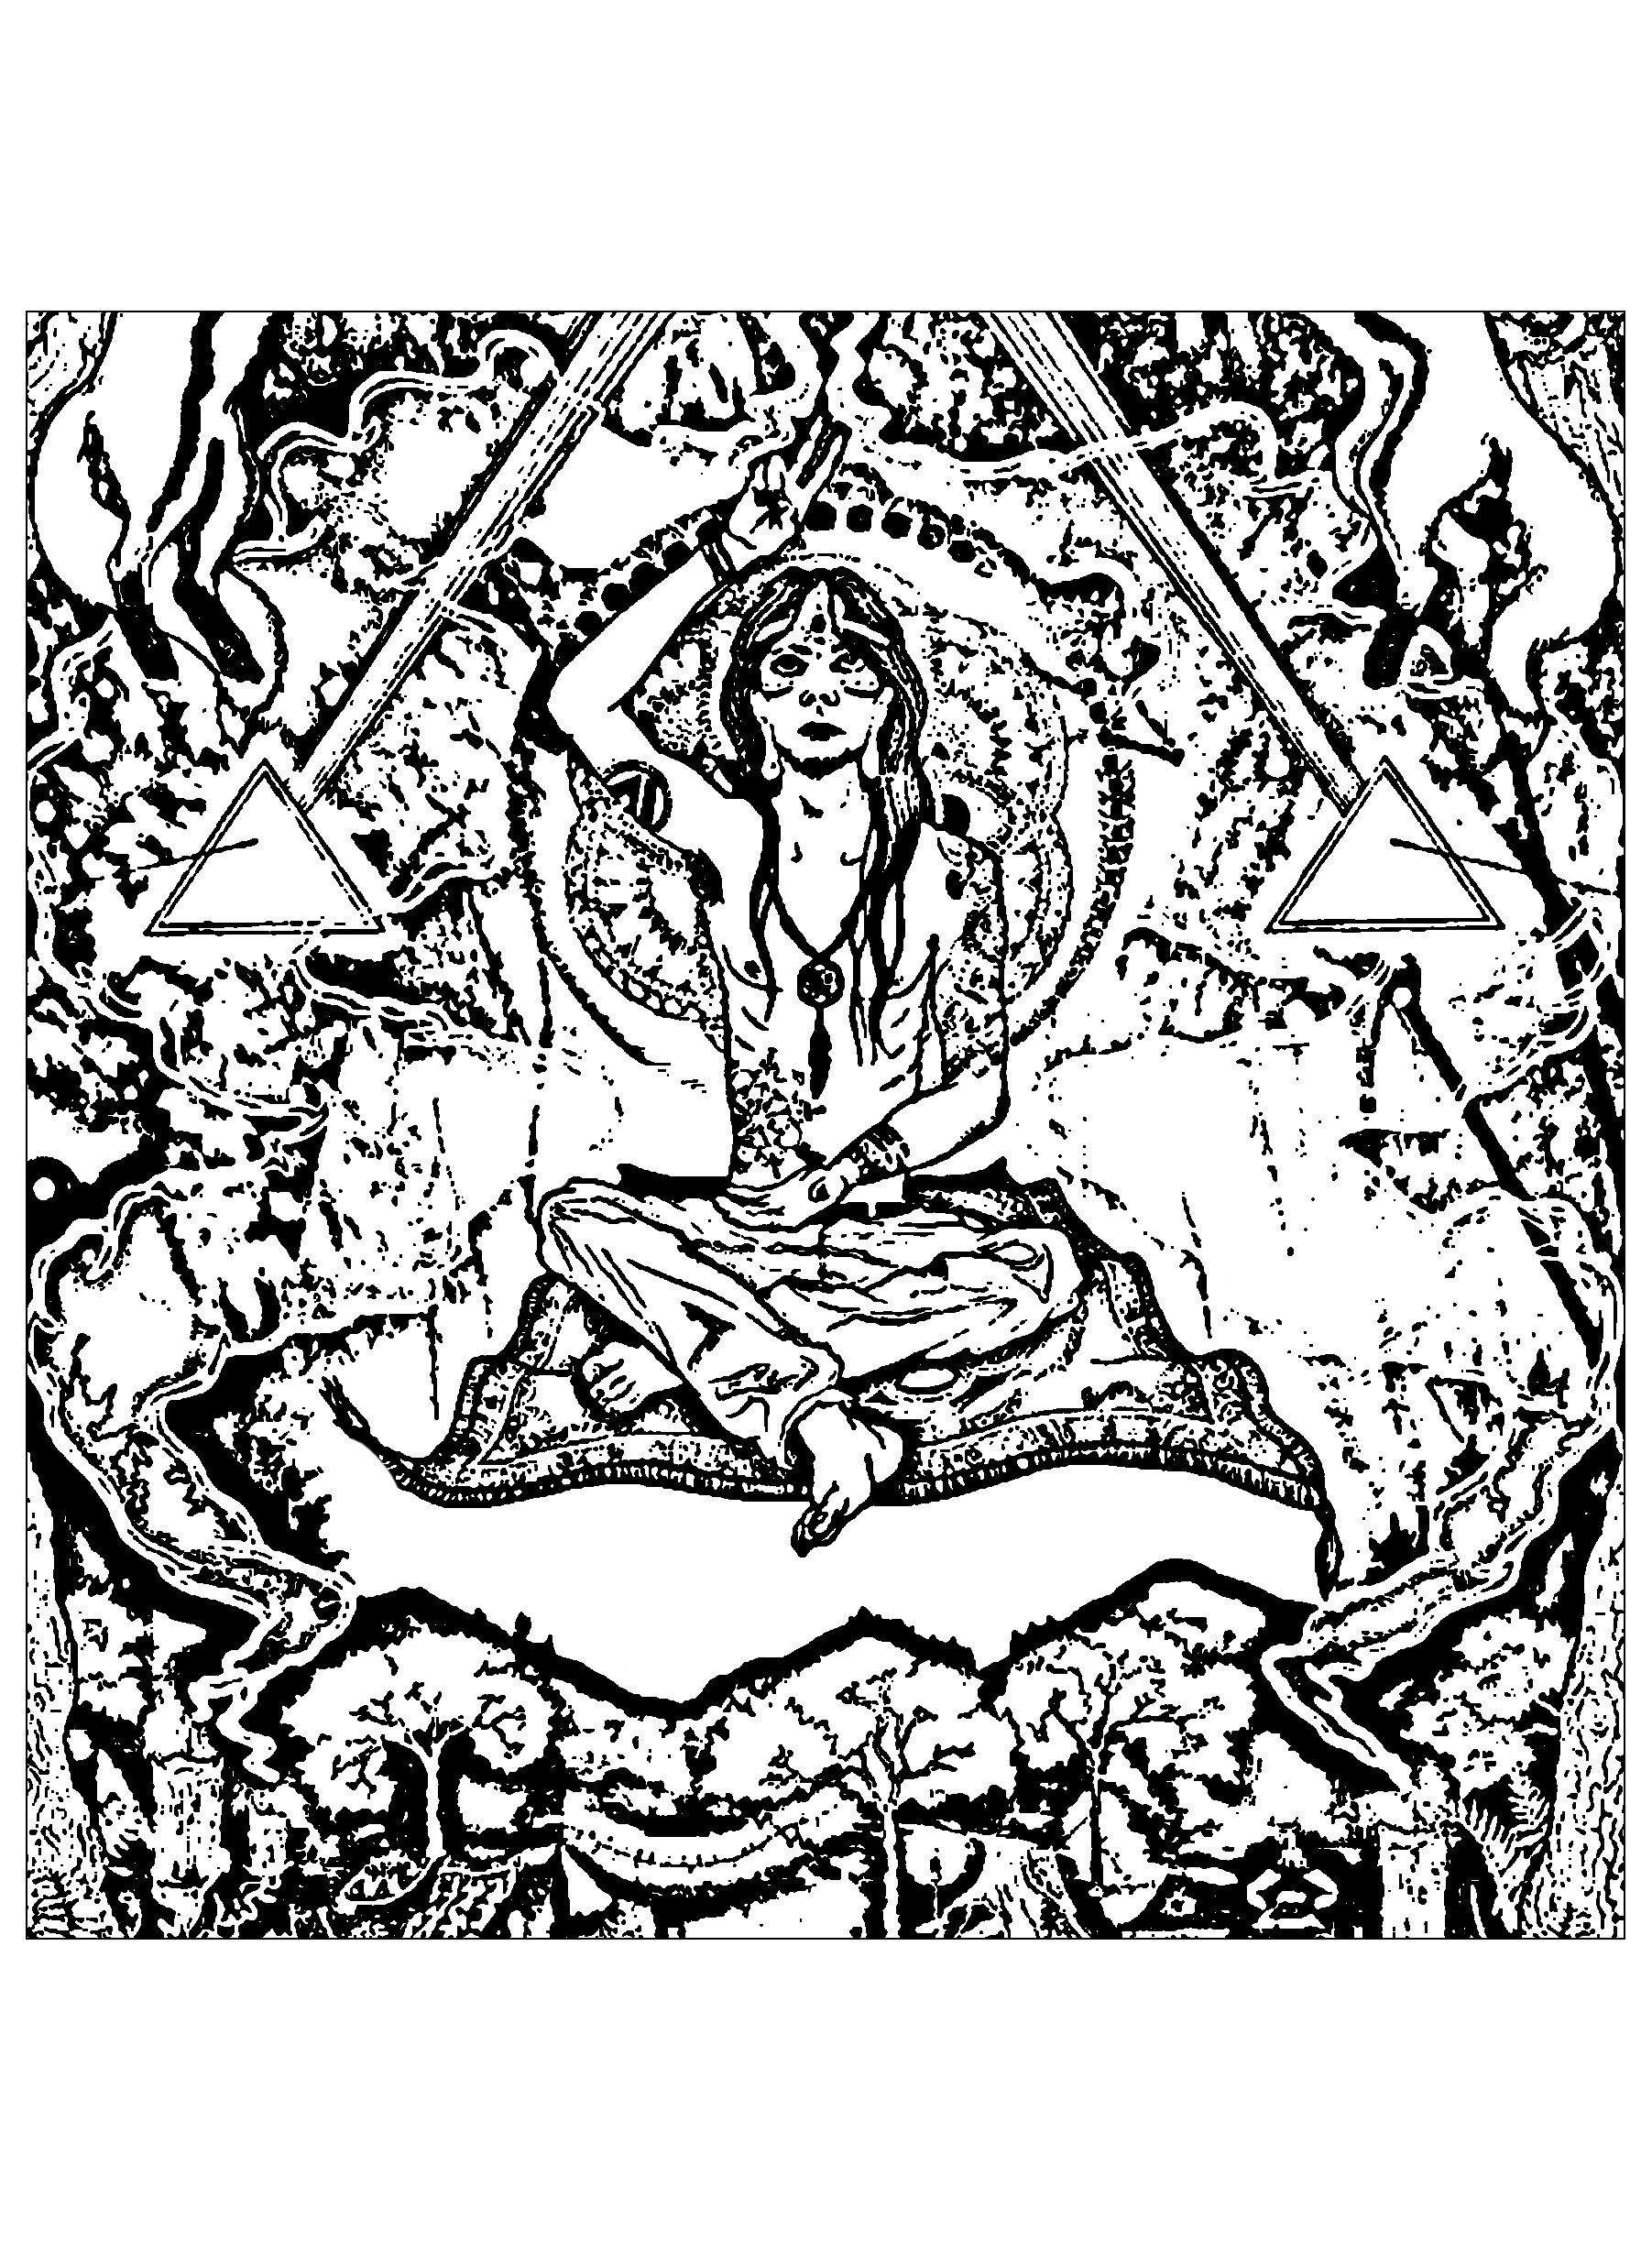 Woman meditating on a carpet, with Illuminati symbols like pyramid